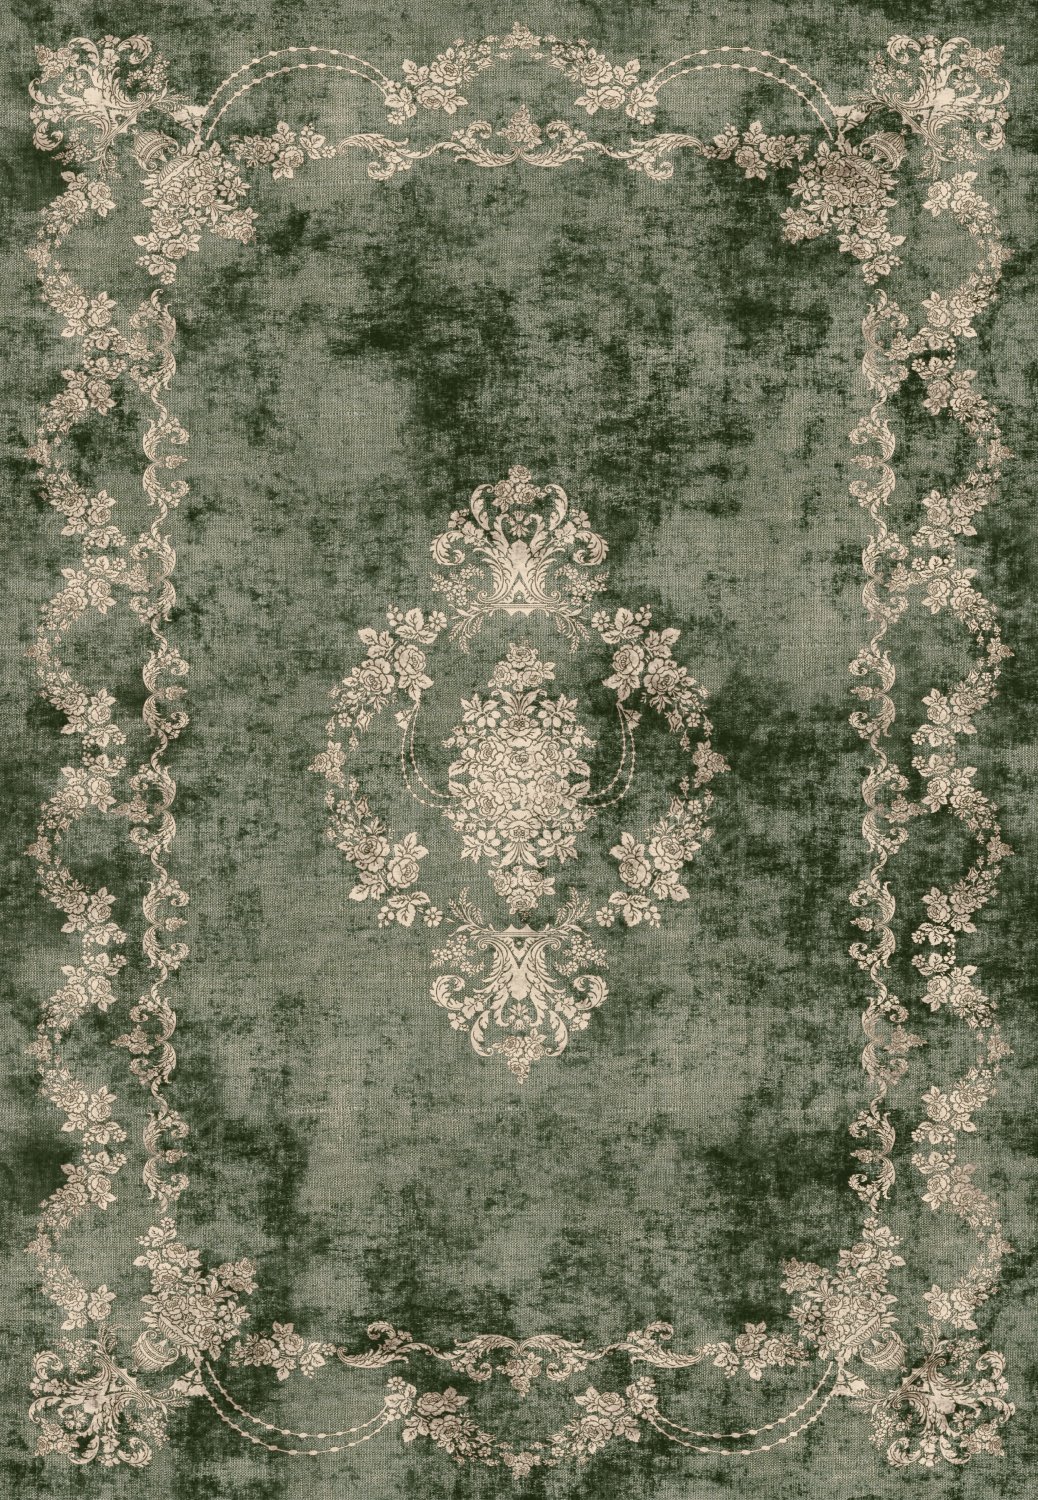 Wilton-teppe - Taknis (grønn)